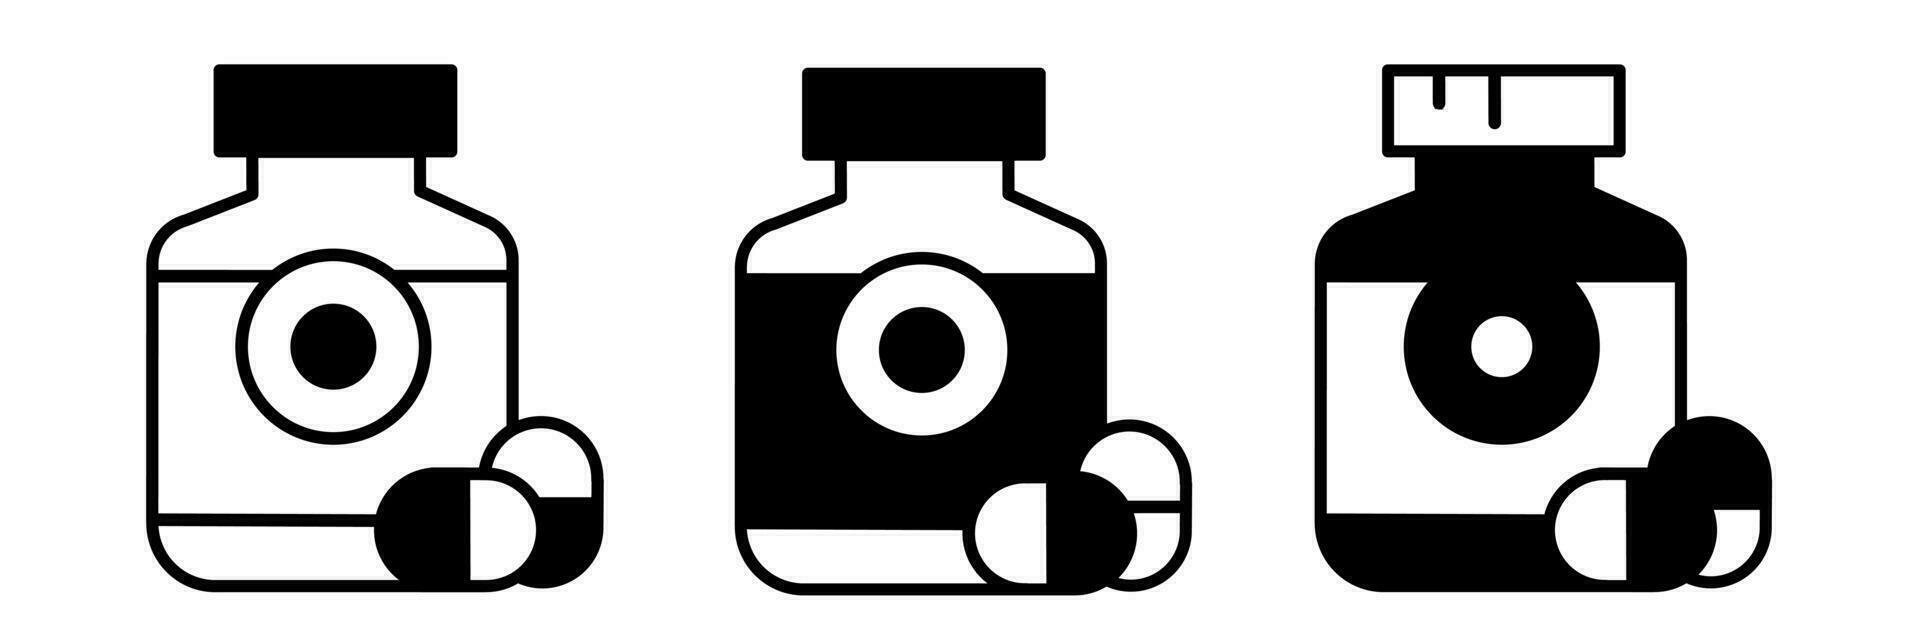 Drug bottle illustration. Drug bottle icon vector set. Design for business. Stock vector.